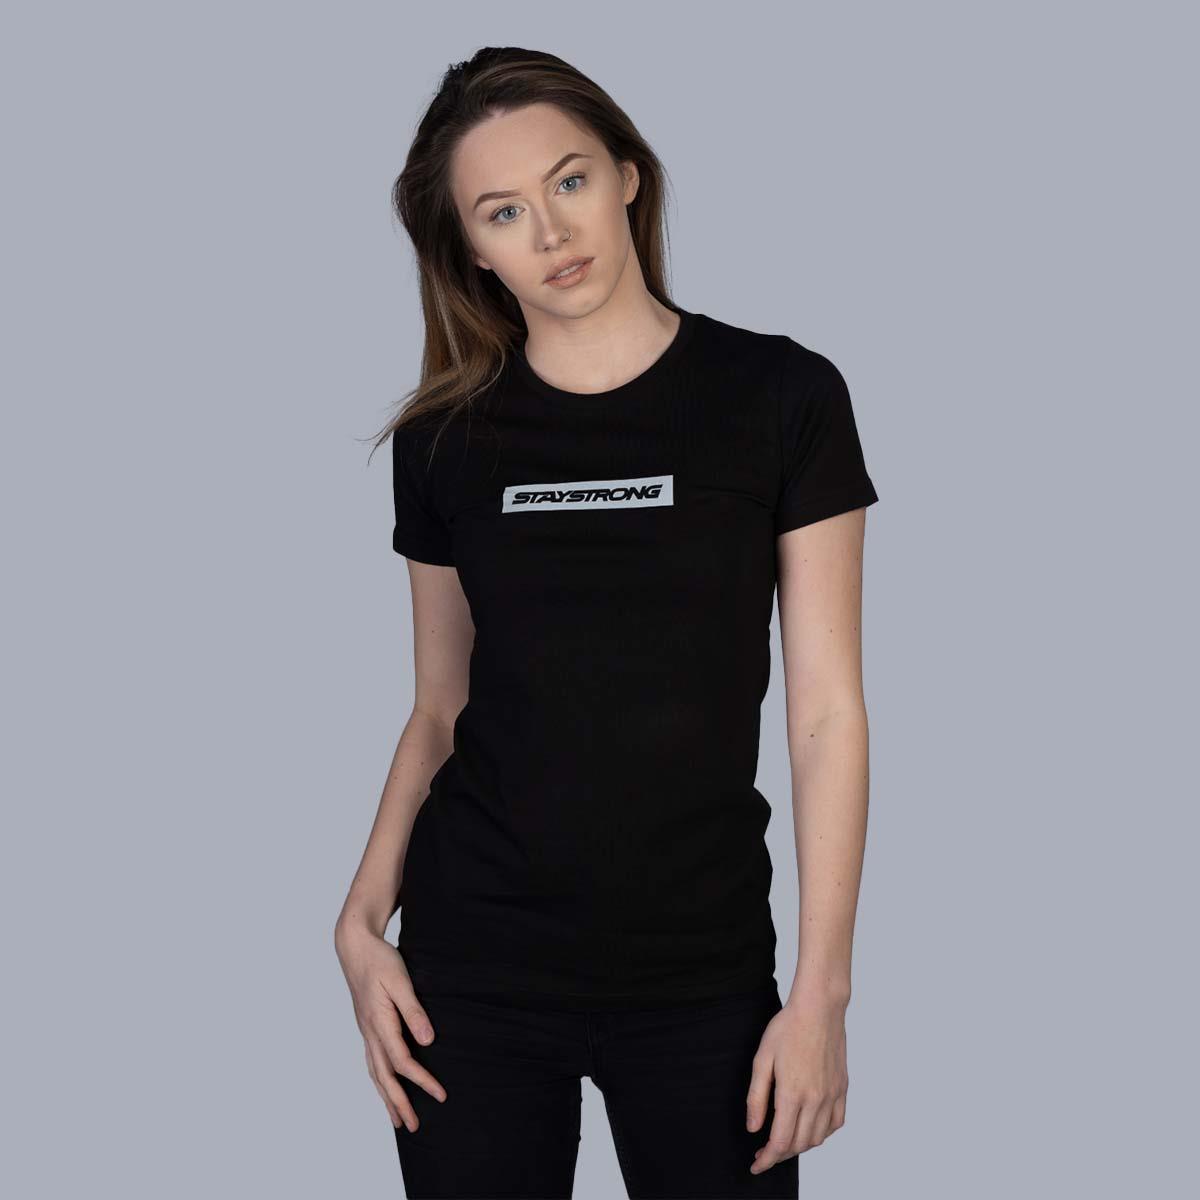 Stay Strong Parola Box T -shirt da donna riflettente - nero